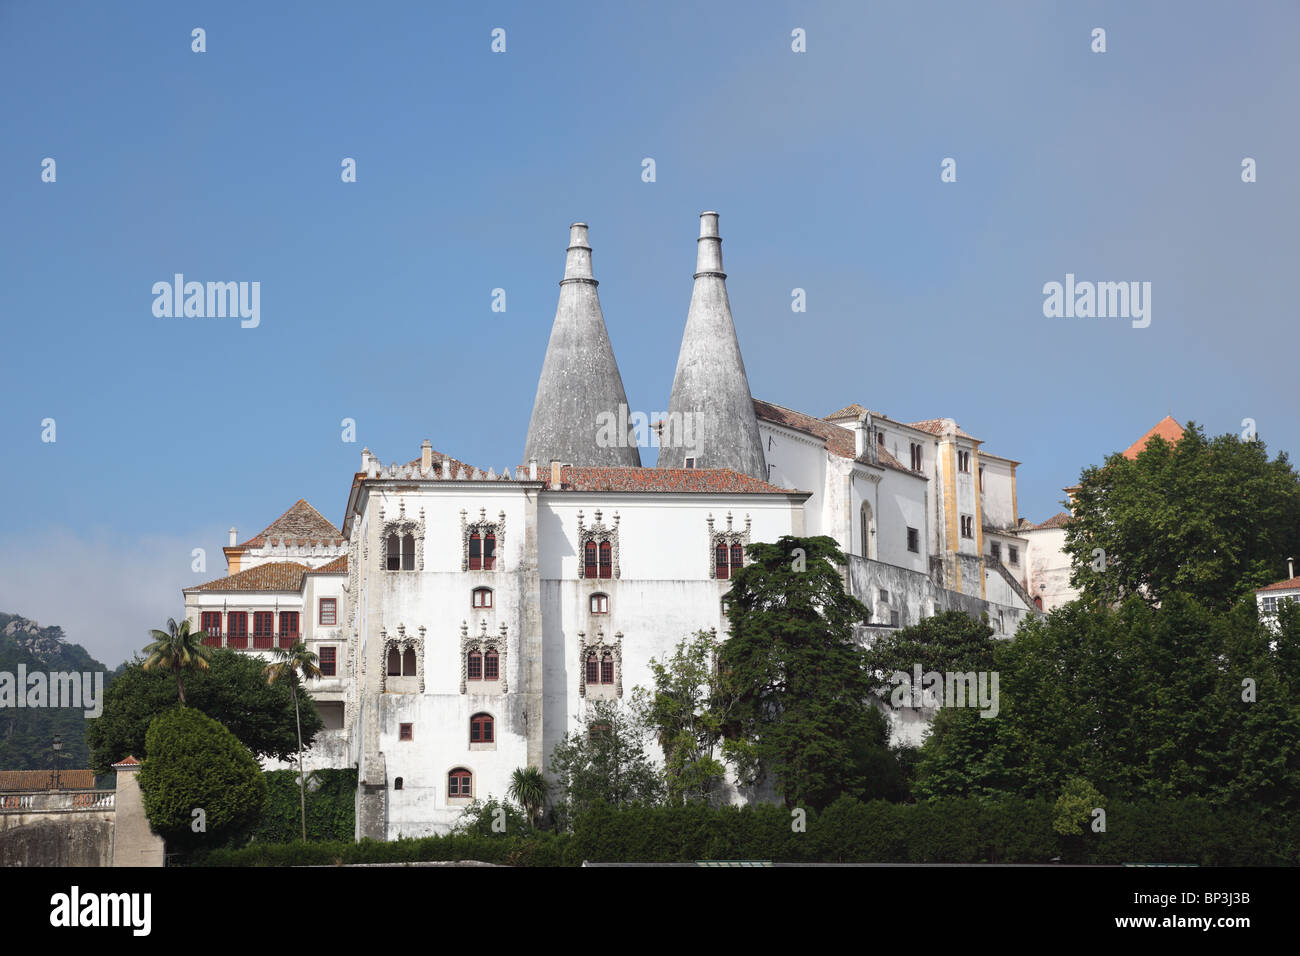 National Palace in Sintra (Palacio Nacional de Sintra), Portugal Stock Photo